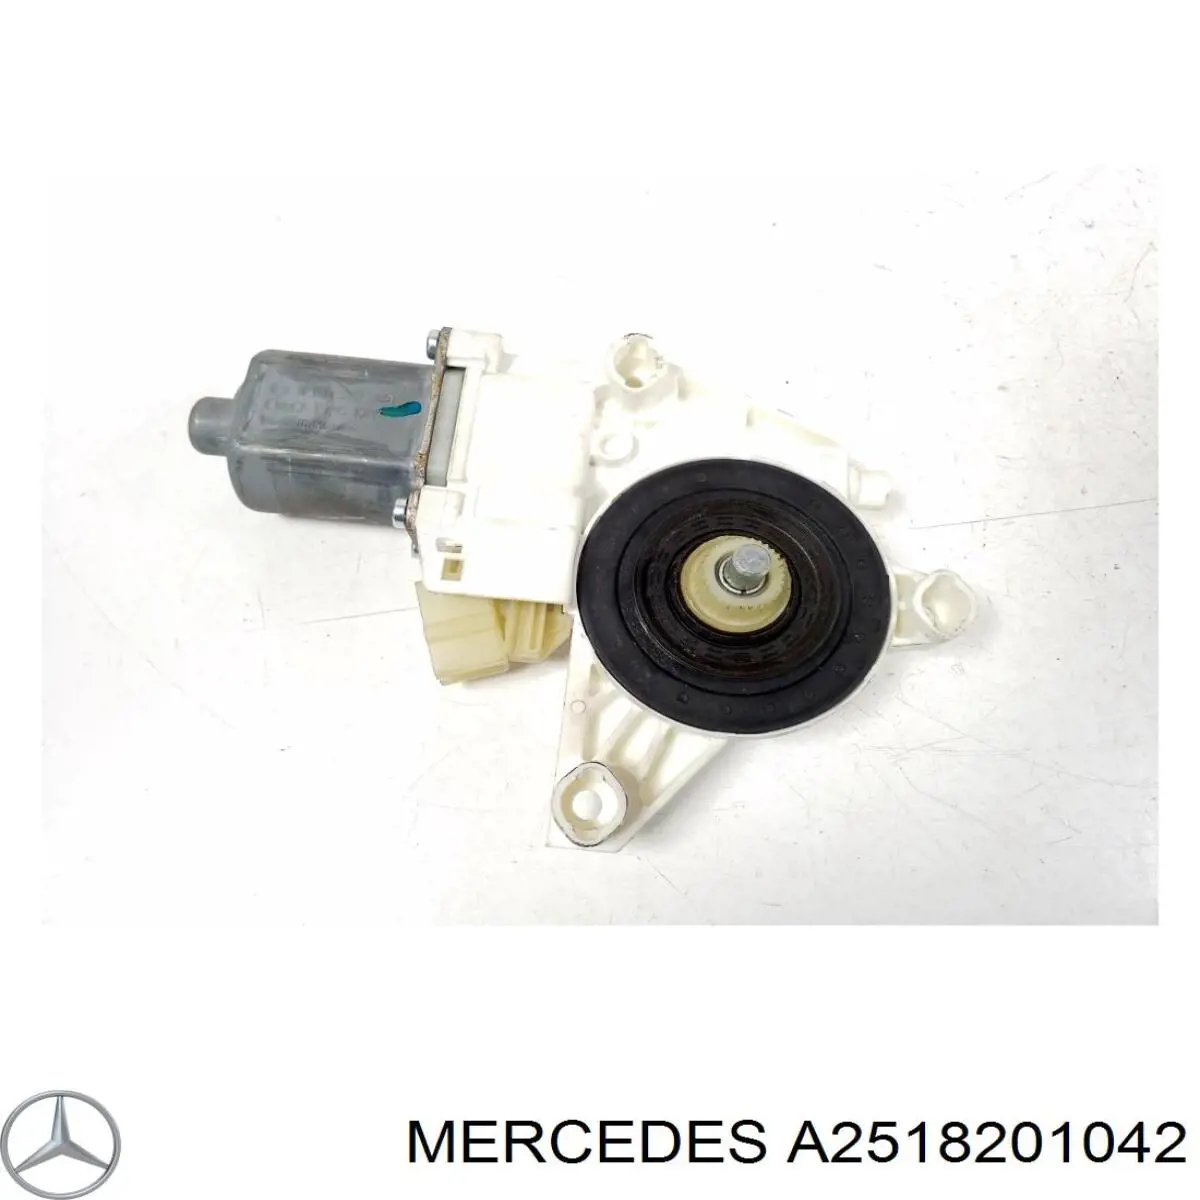 Motor de acionamento de vidro da porta traseira direita para Mercedes ML/GLE (W164)